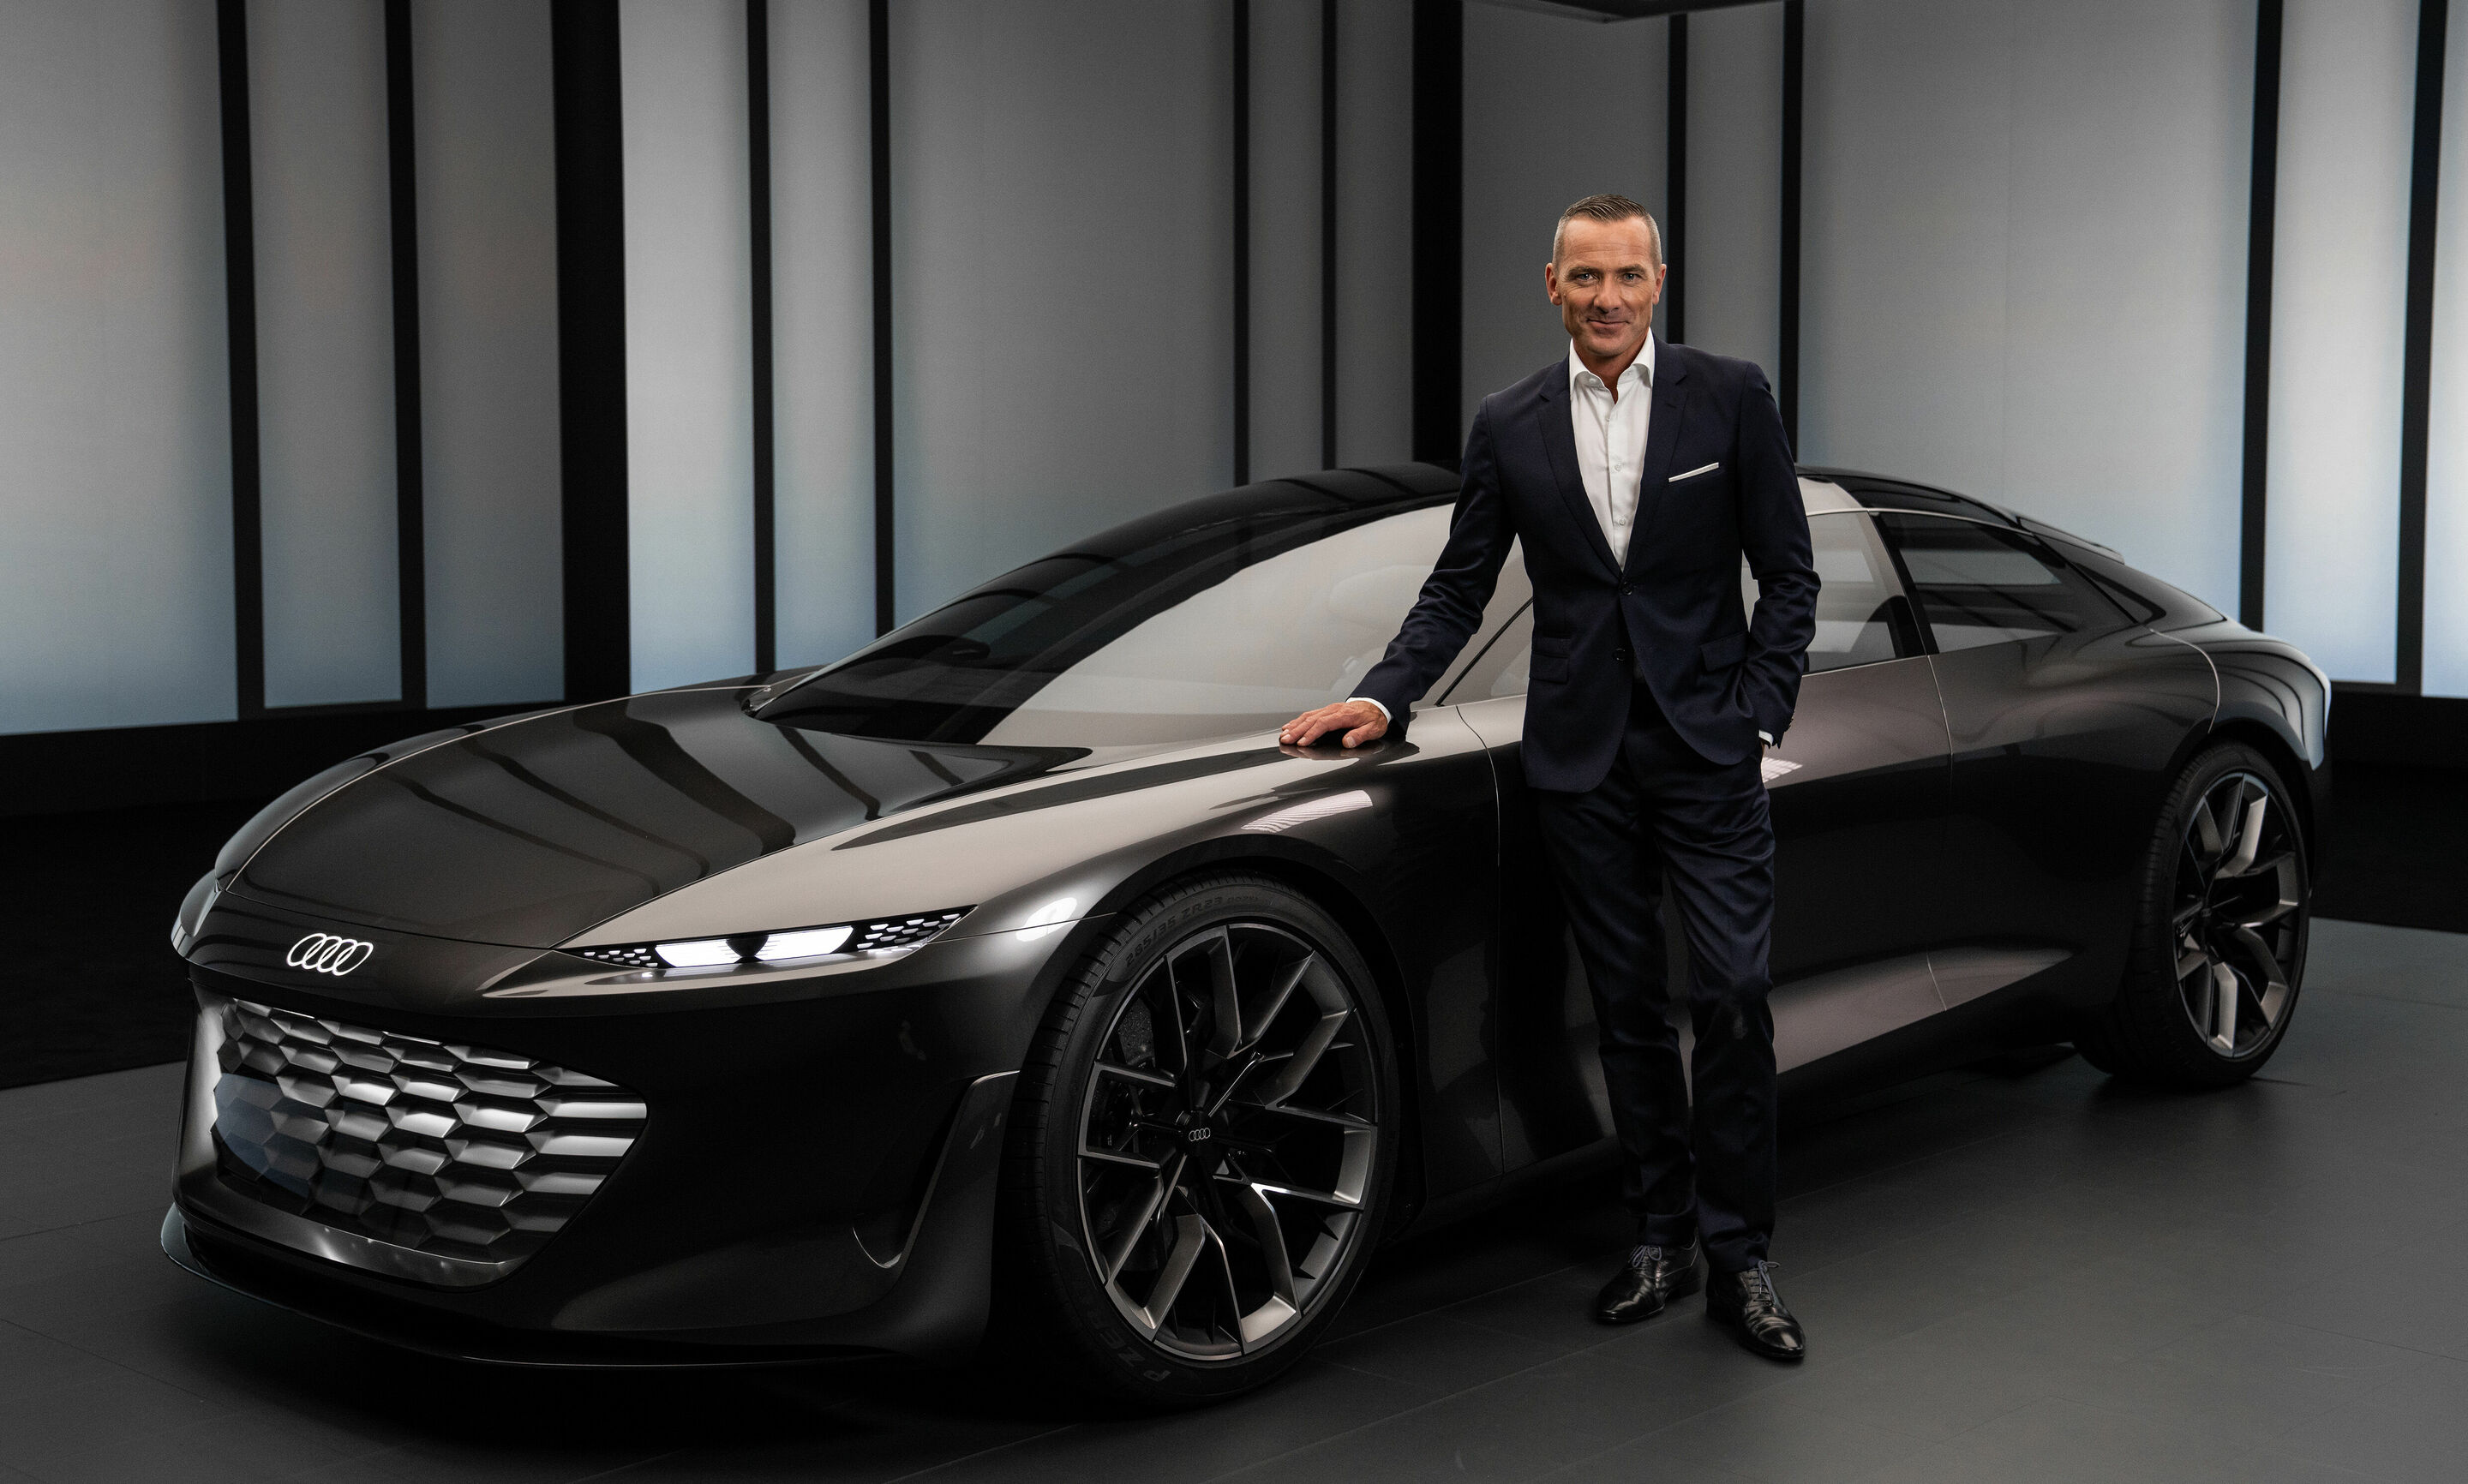 World Premiere Audi grandsphere concept – Celebration of Progress